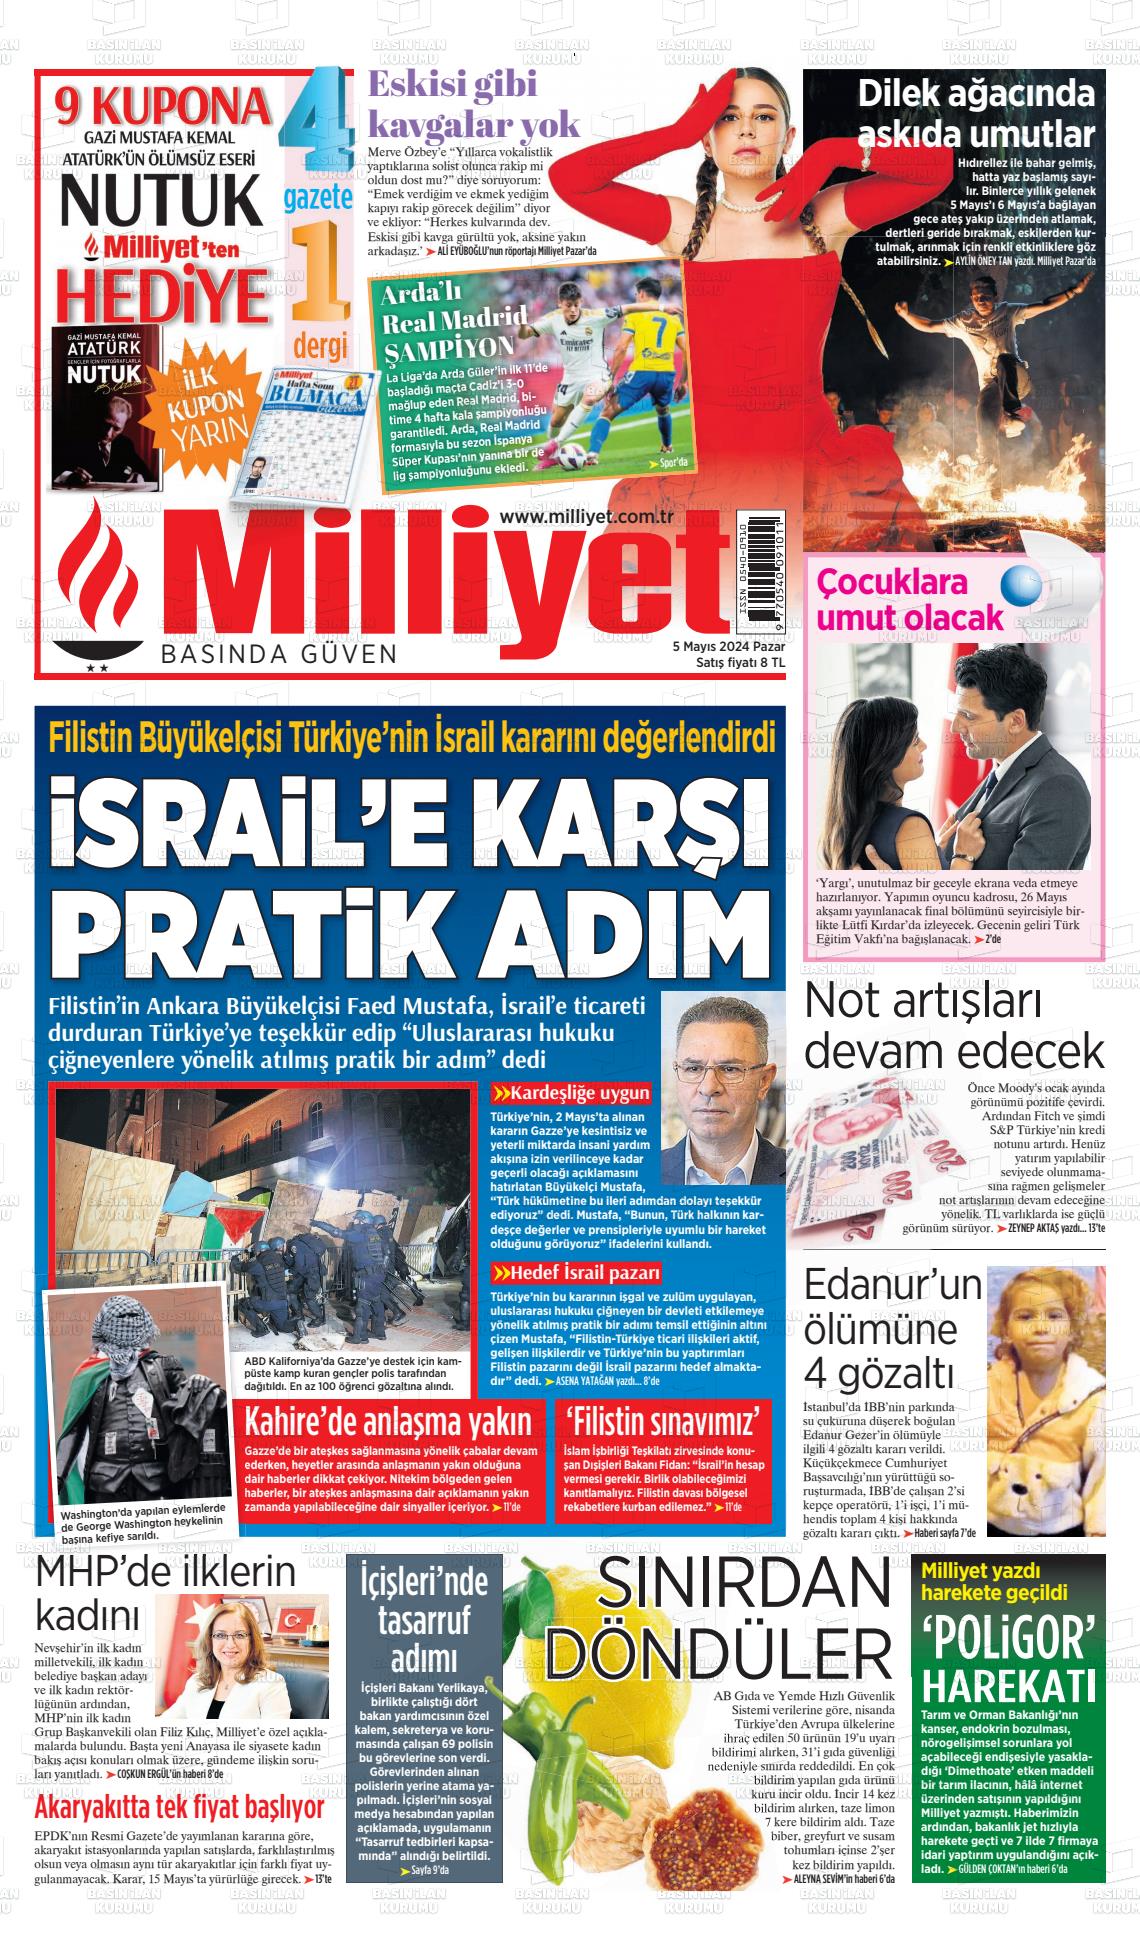 Milliyet gazetesi shattered island